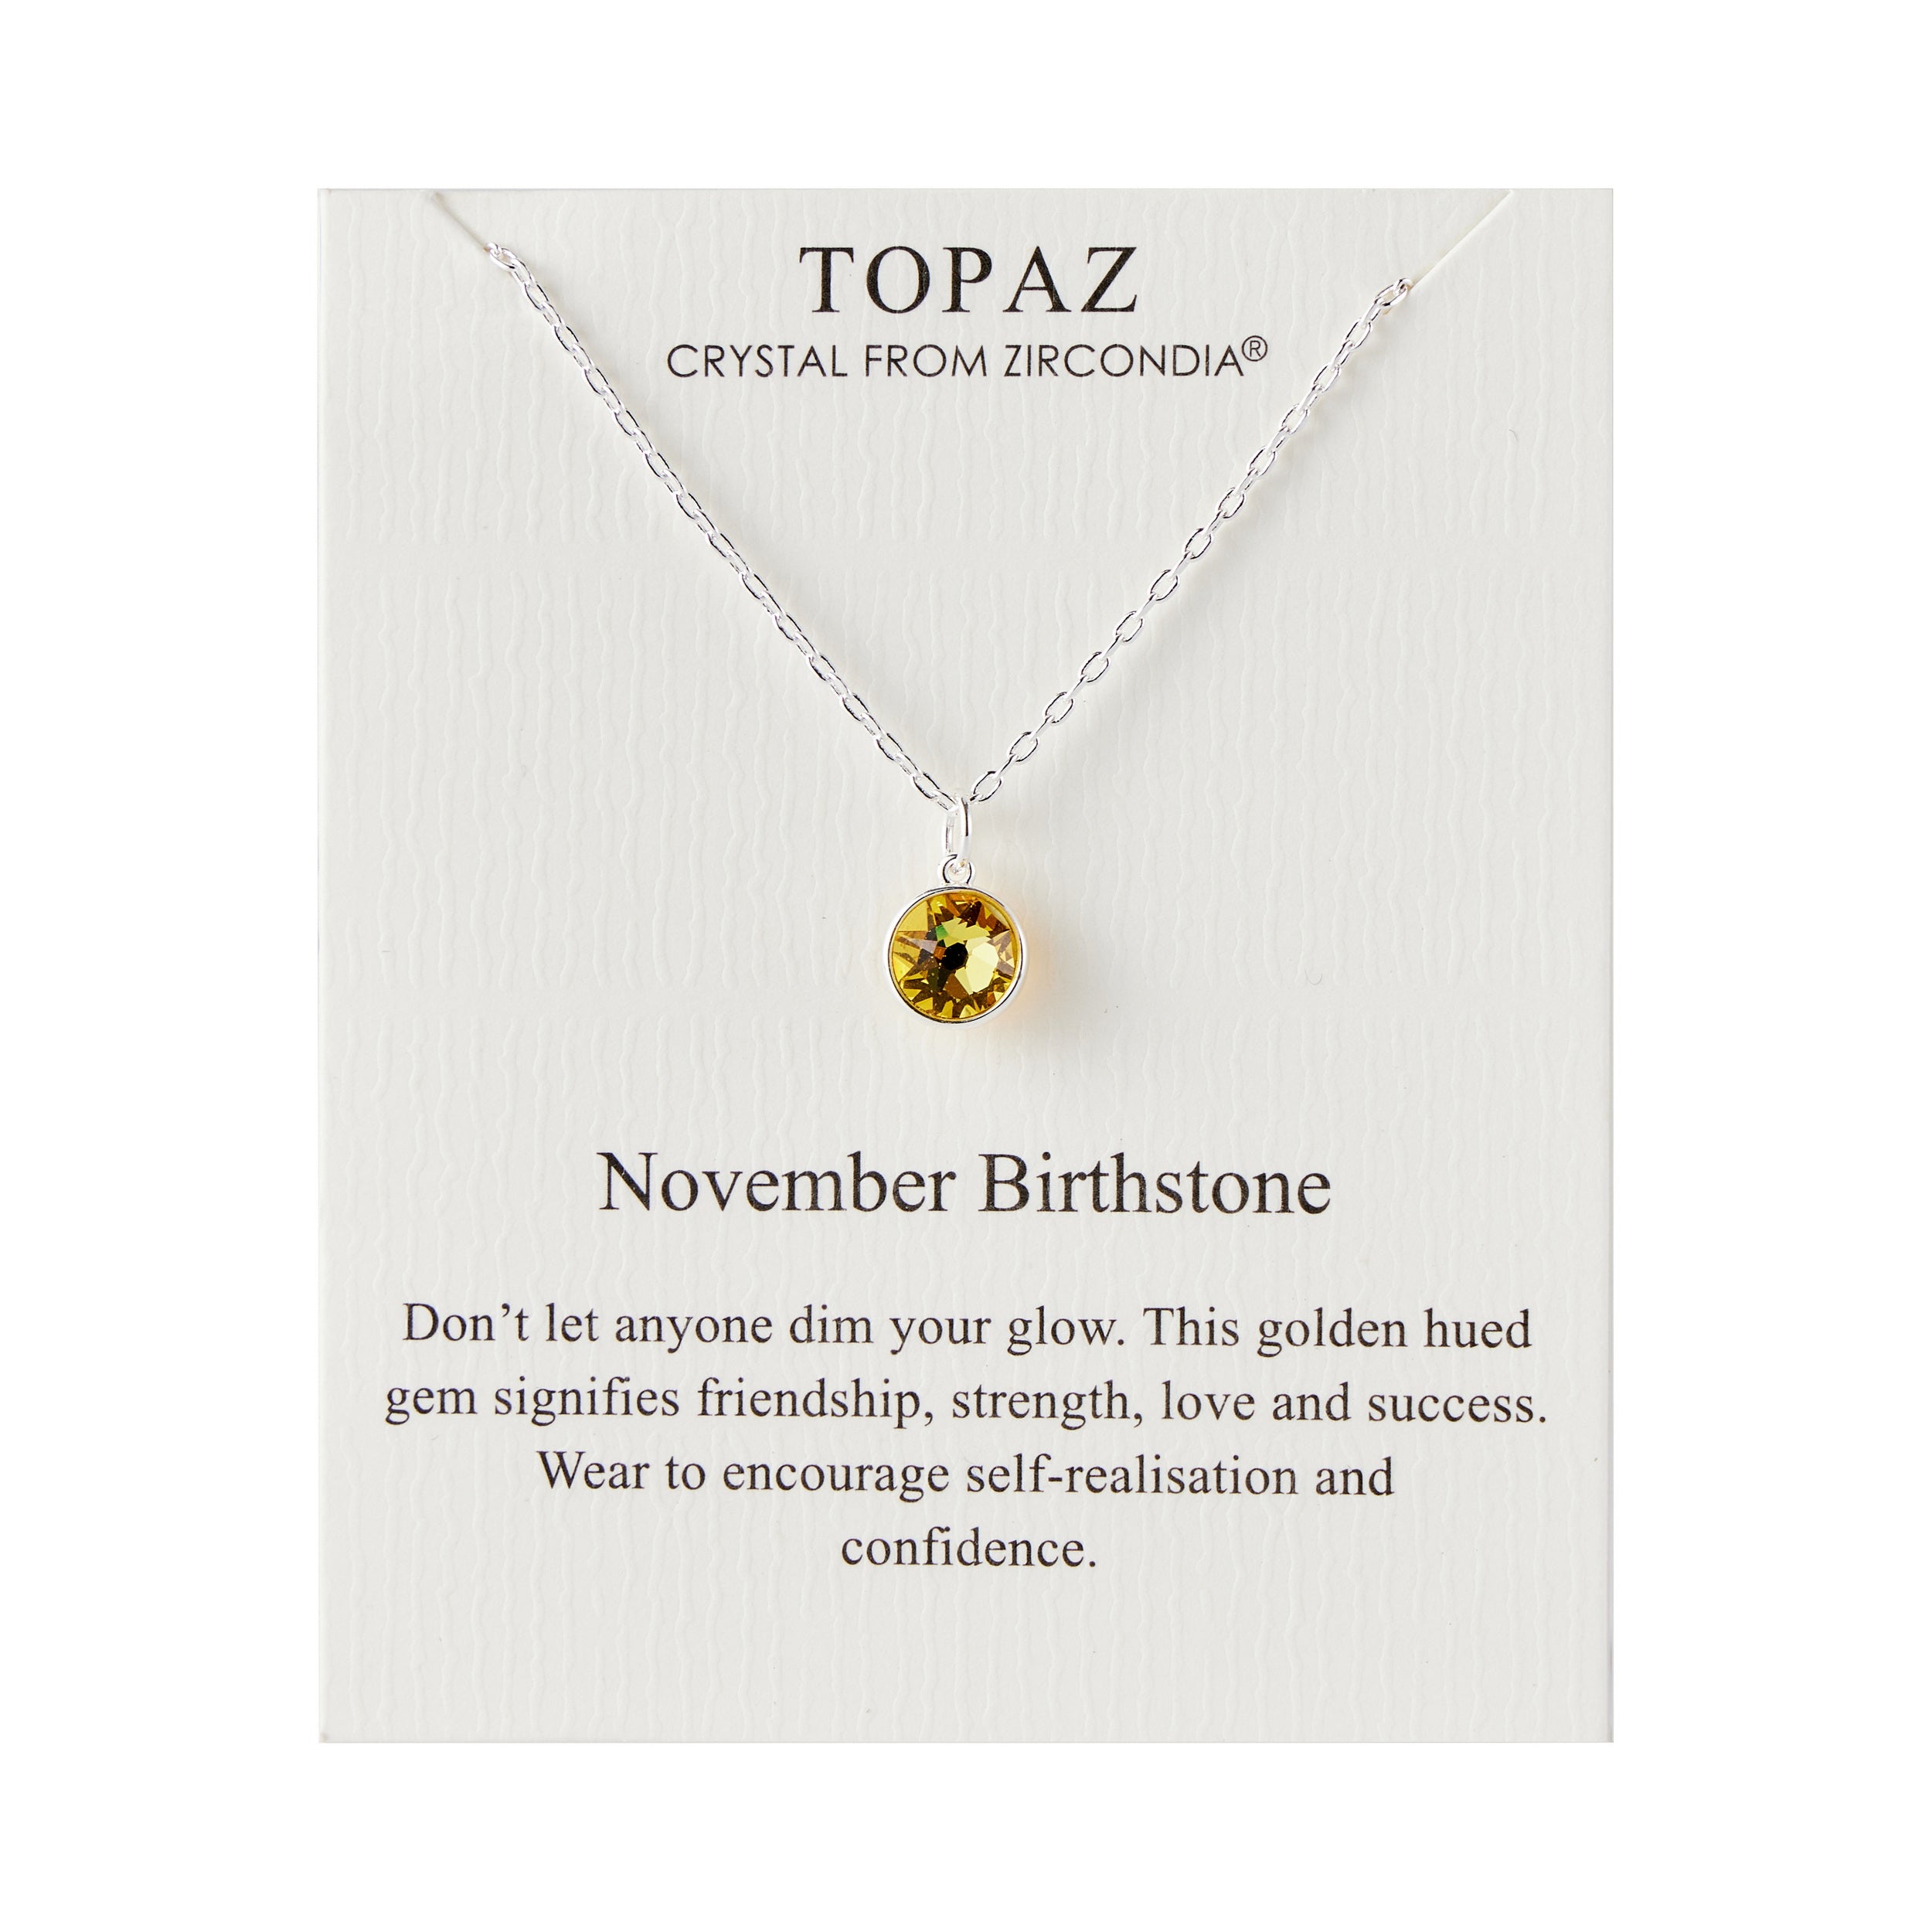 November (Topaz) Birthstone Necklace Created with Zircondia® Crystals